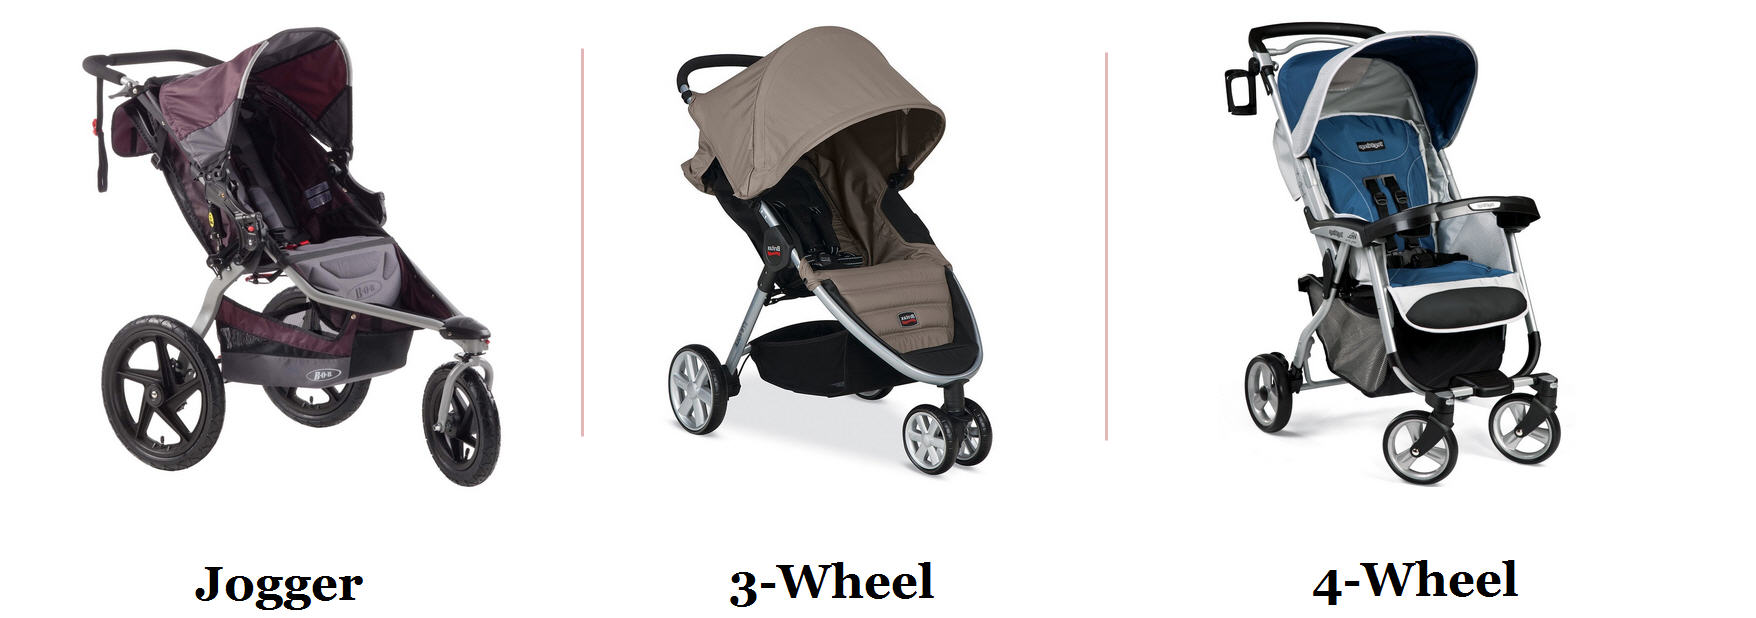 best 3 wheel stroller with car seat